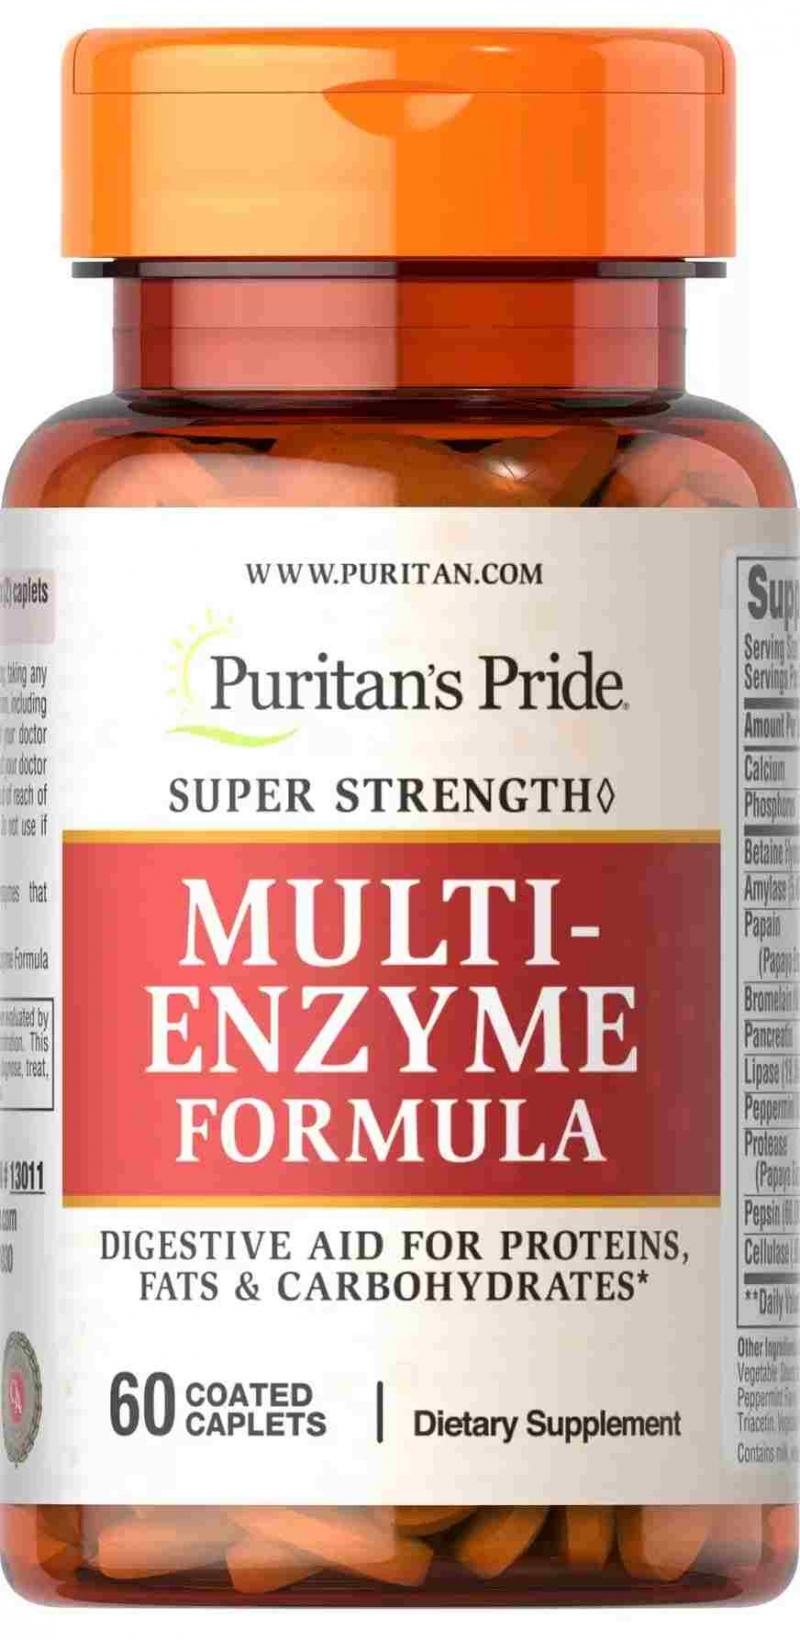 Super Strength Multi Enzyme